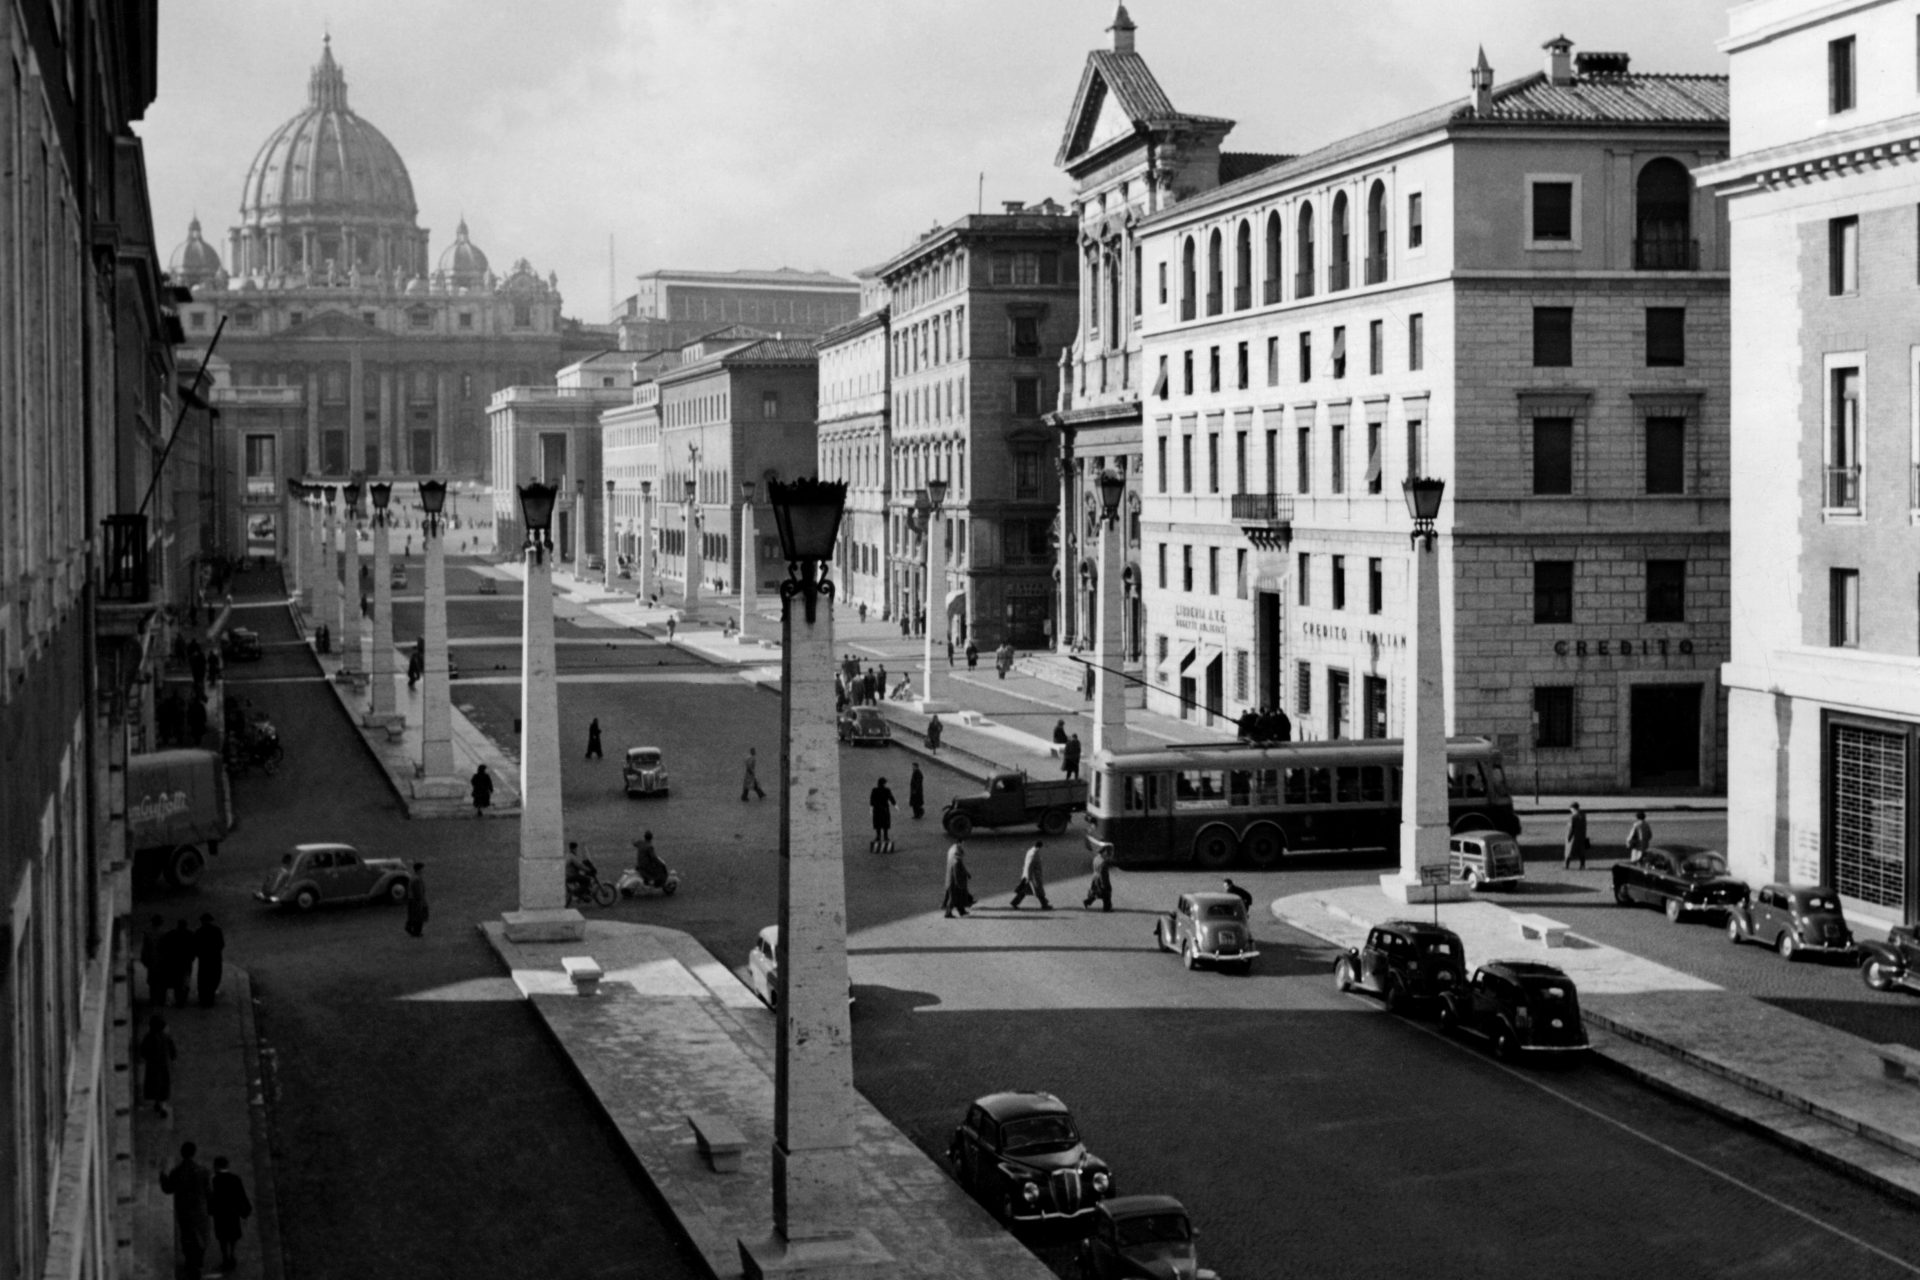 Italy after World War II